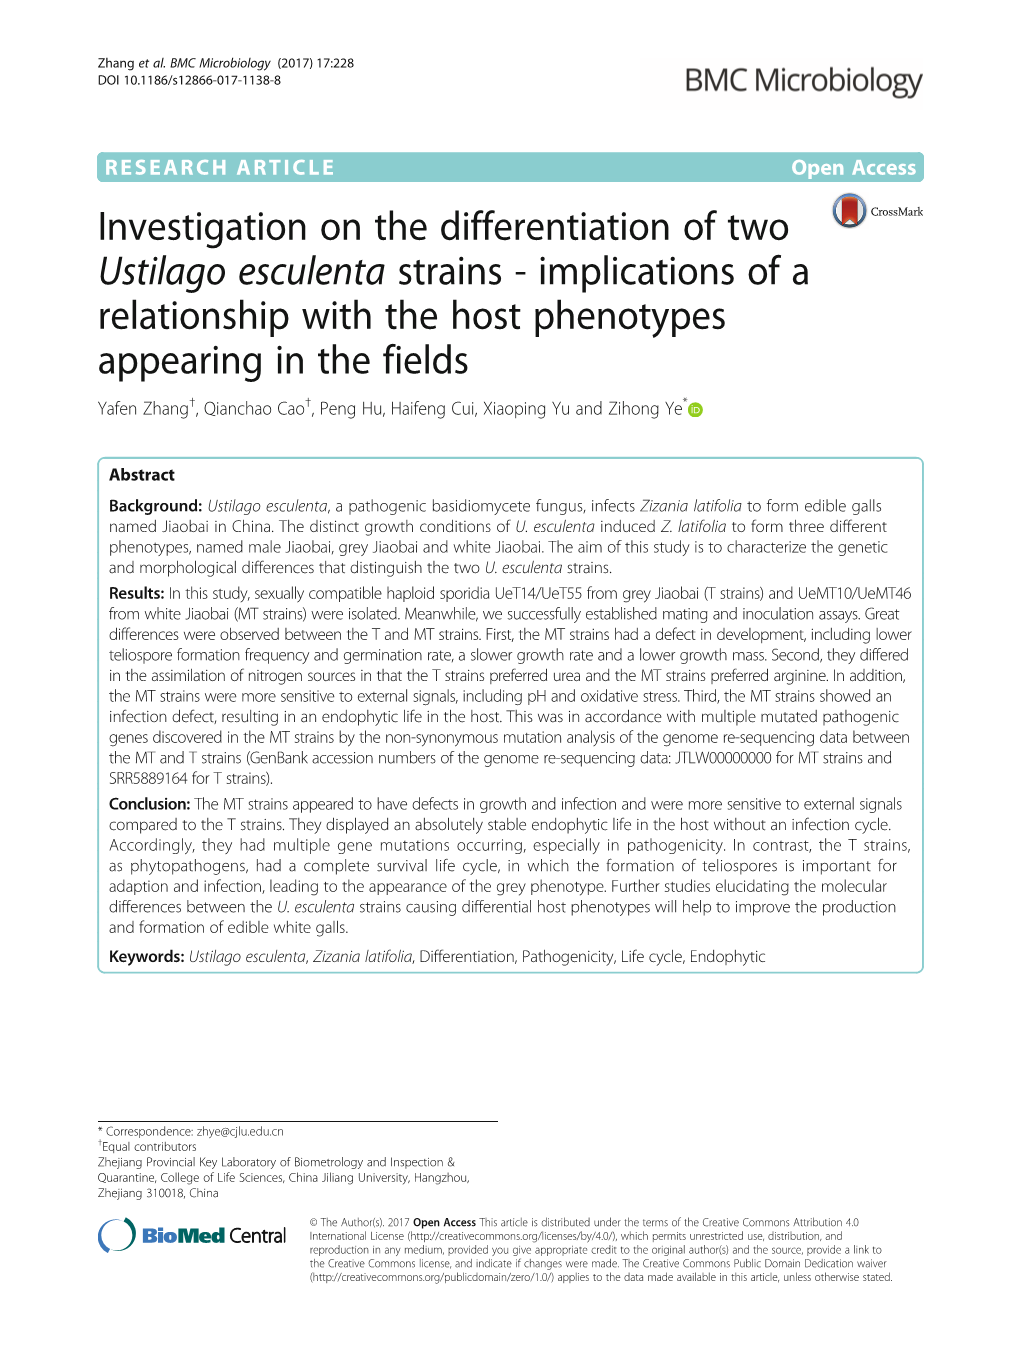 Investigation on the Differentiation of Two Ustilago Esculenta Strains